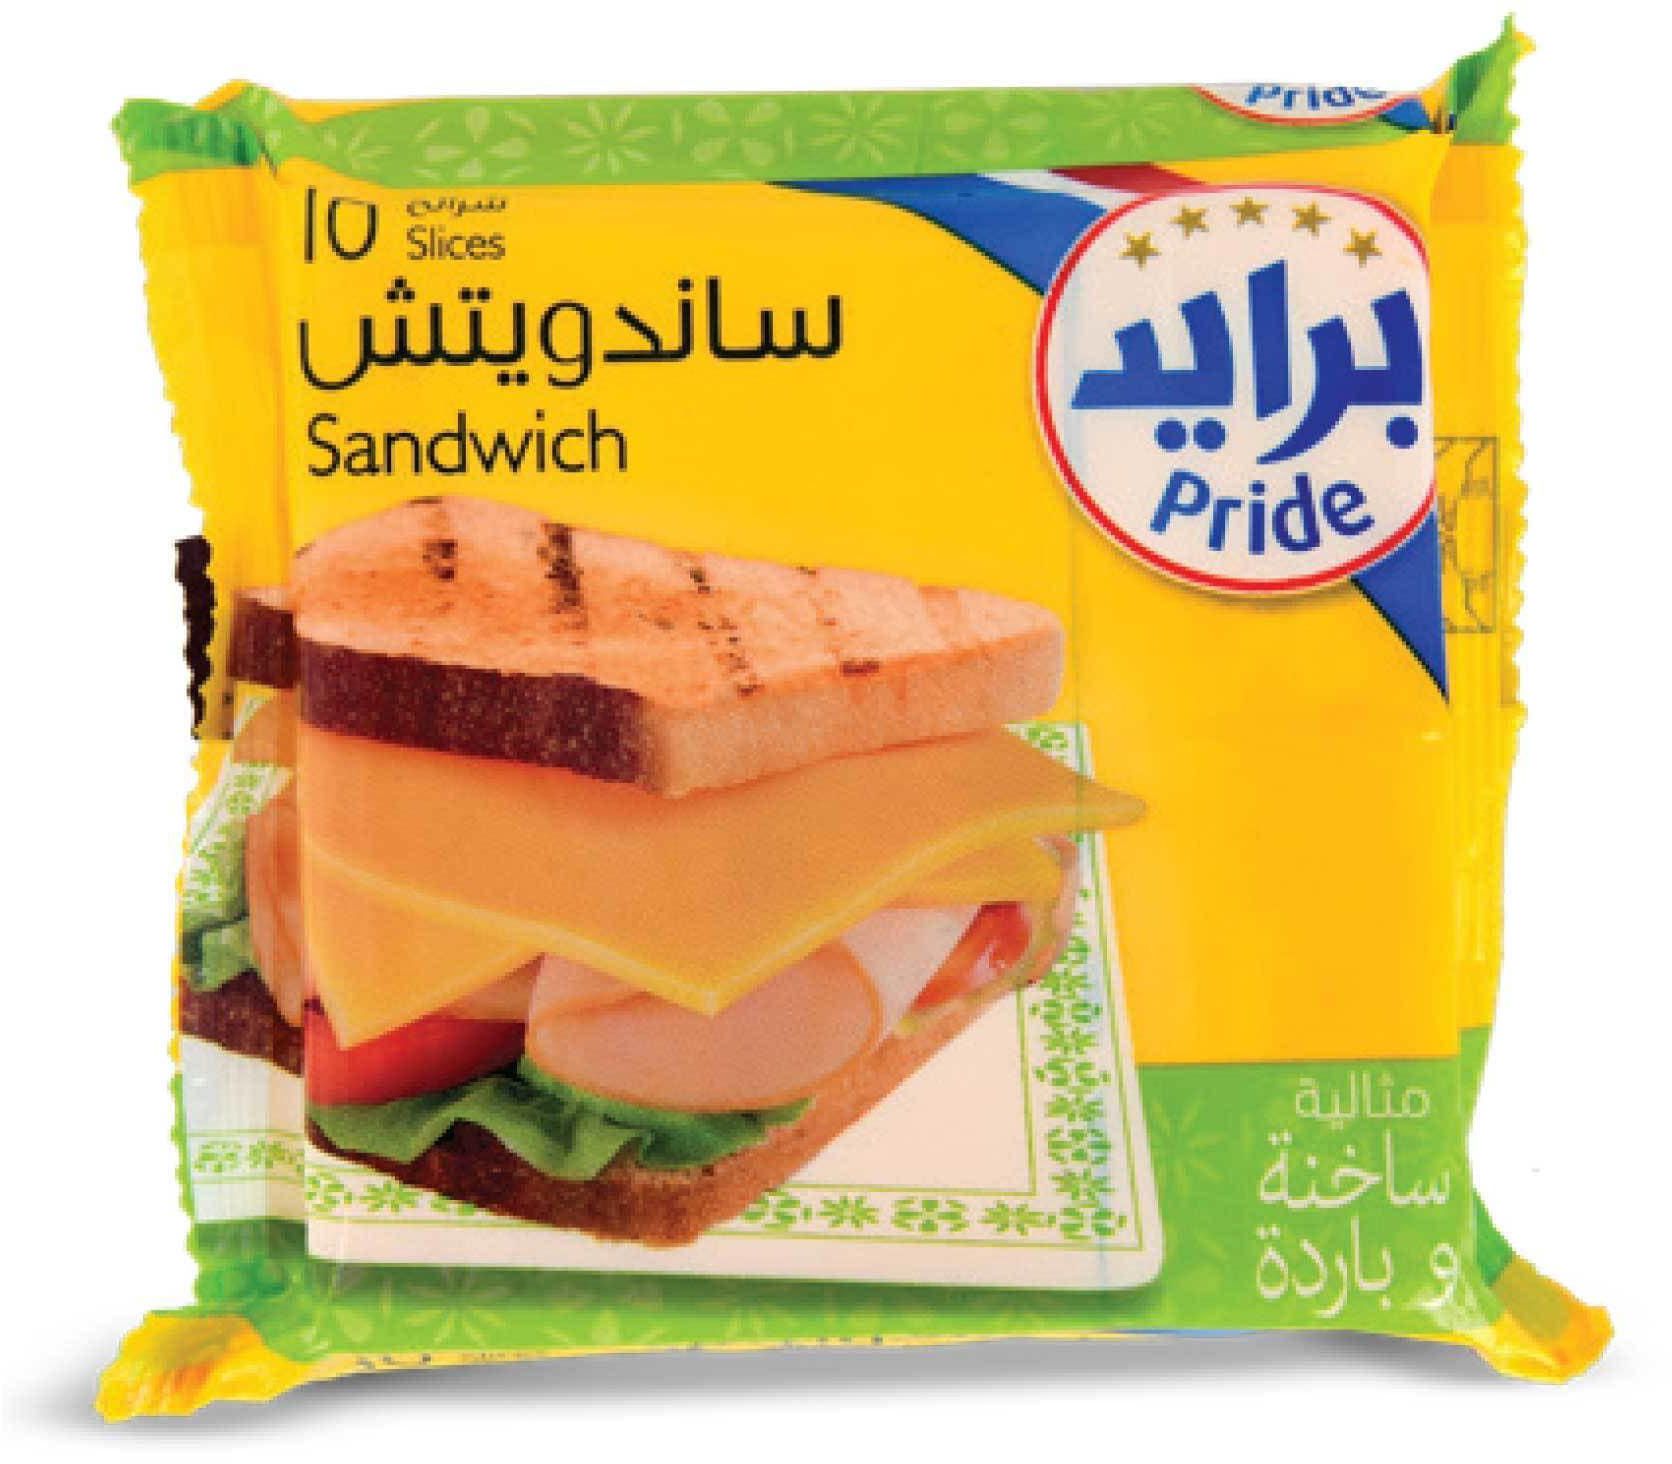 Pride sandwich slice cheese 10 slices (200 g)